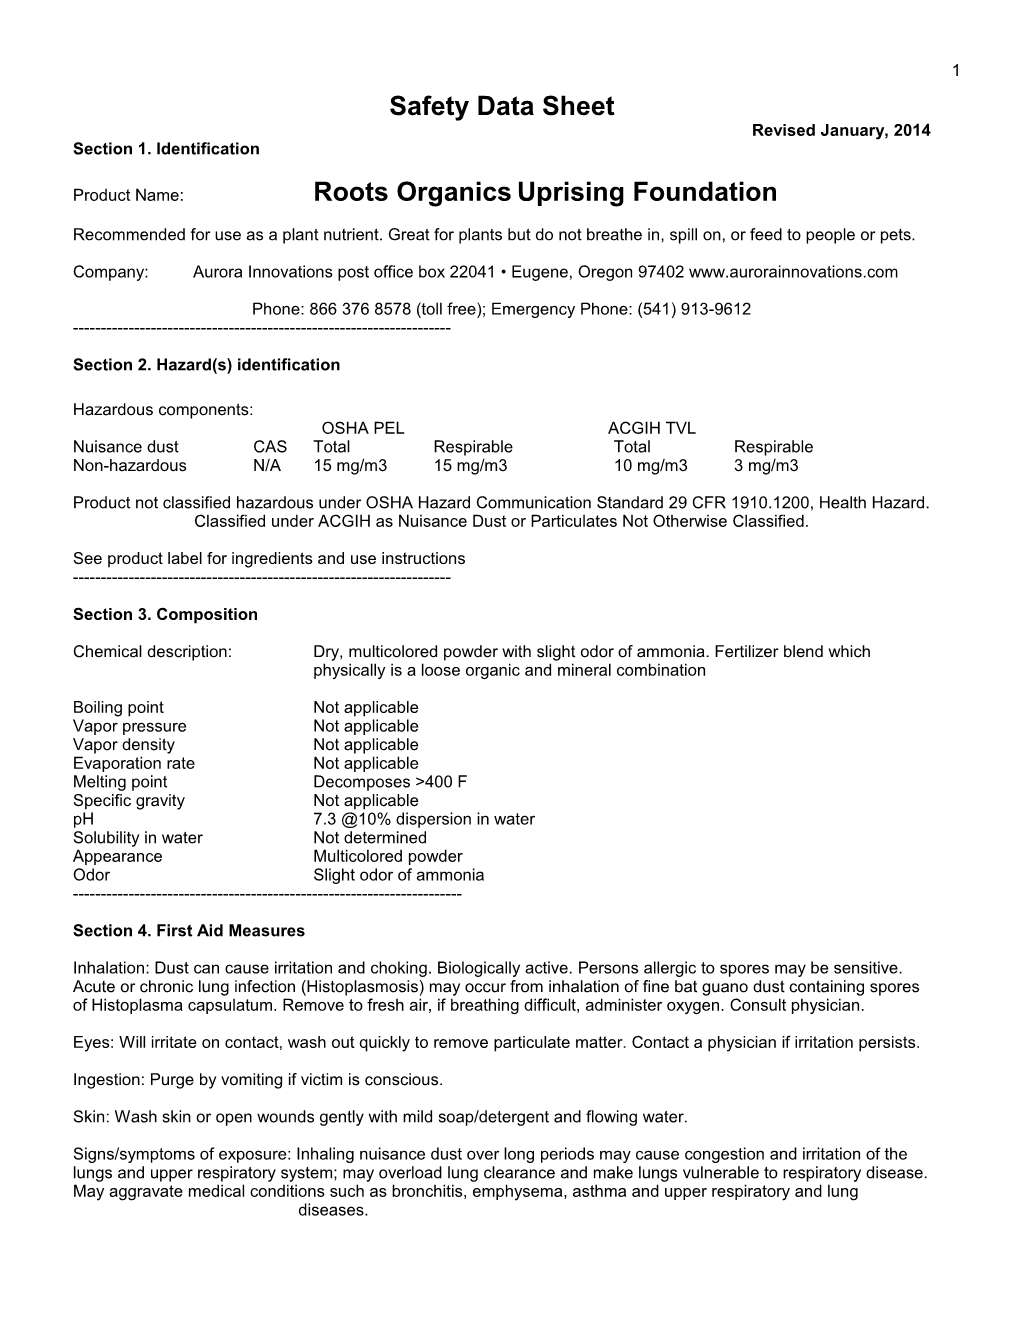 Product Name: Roots Organicsuprising Foundation